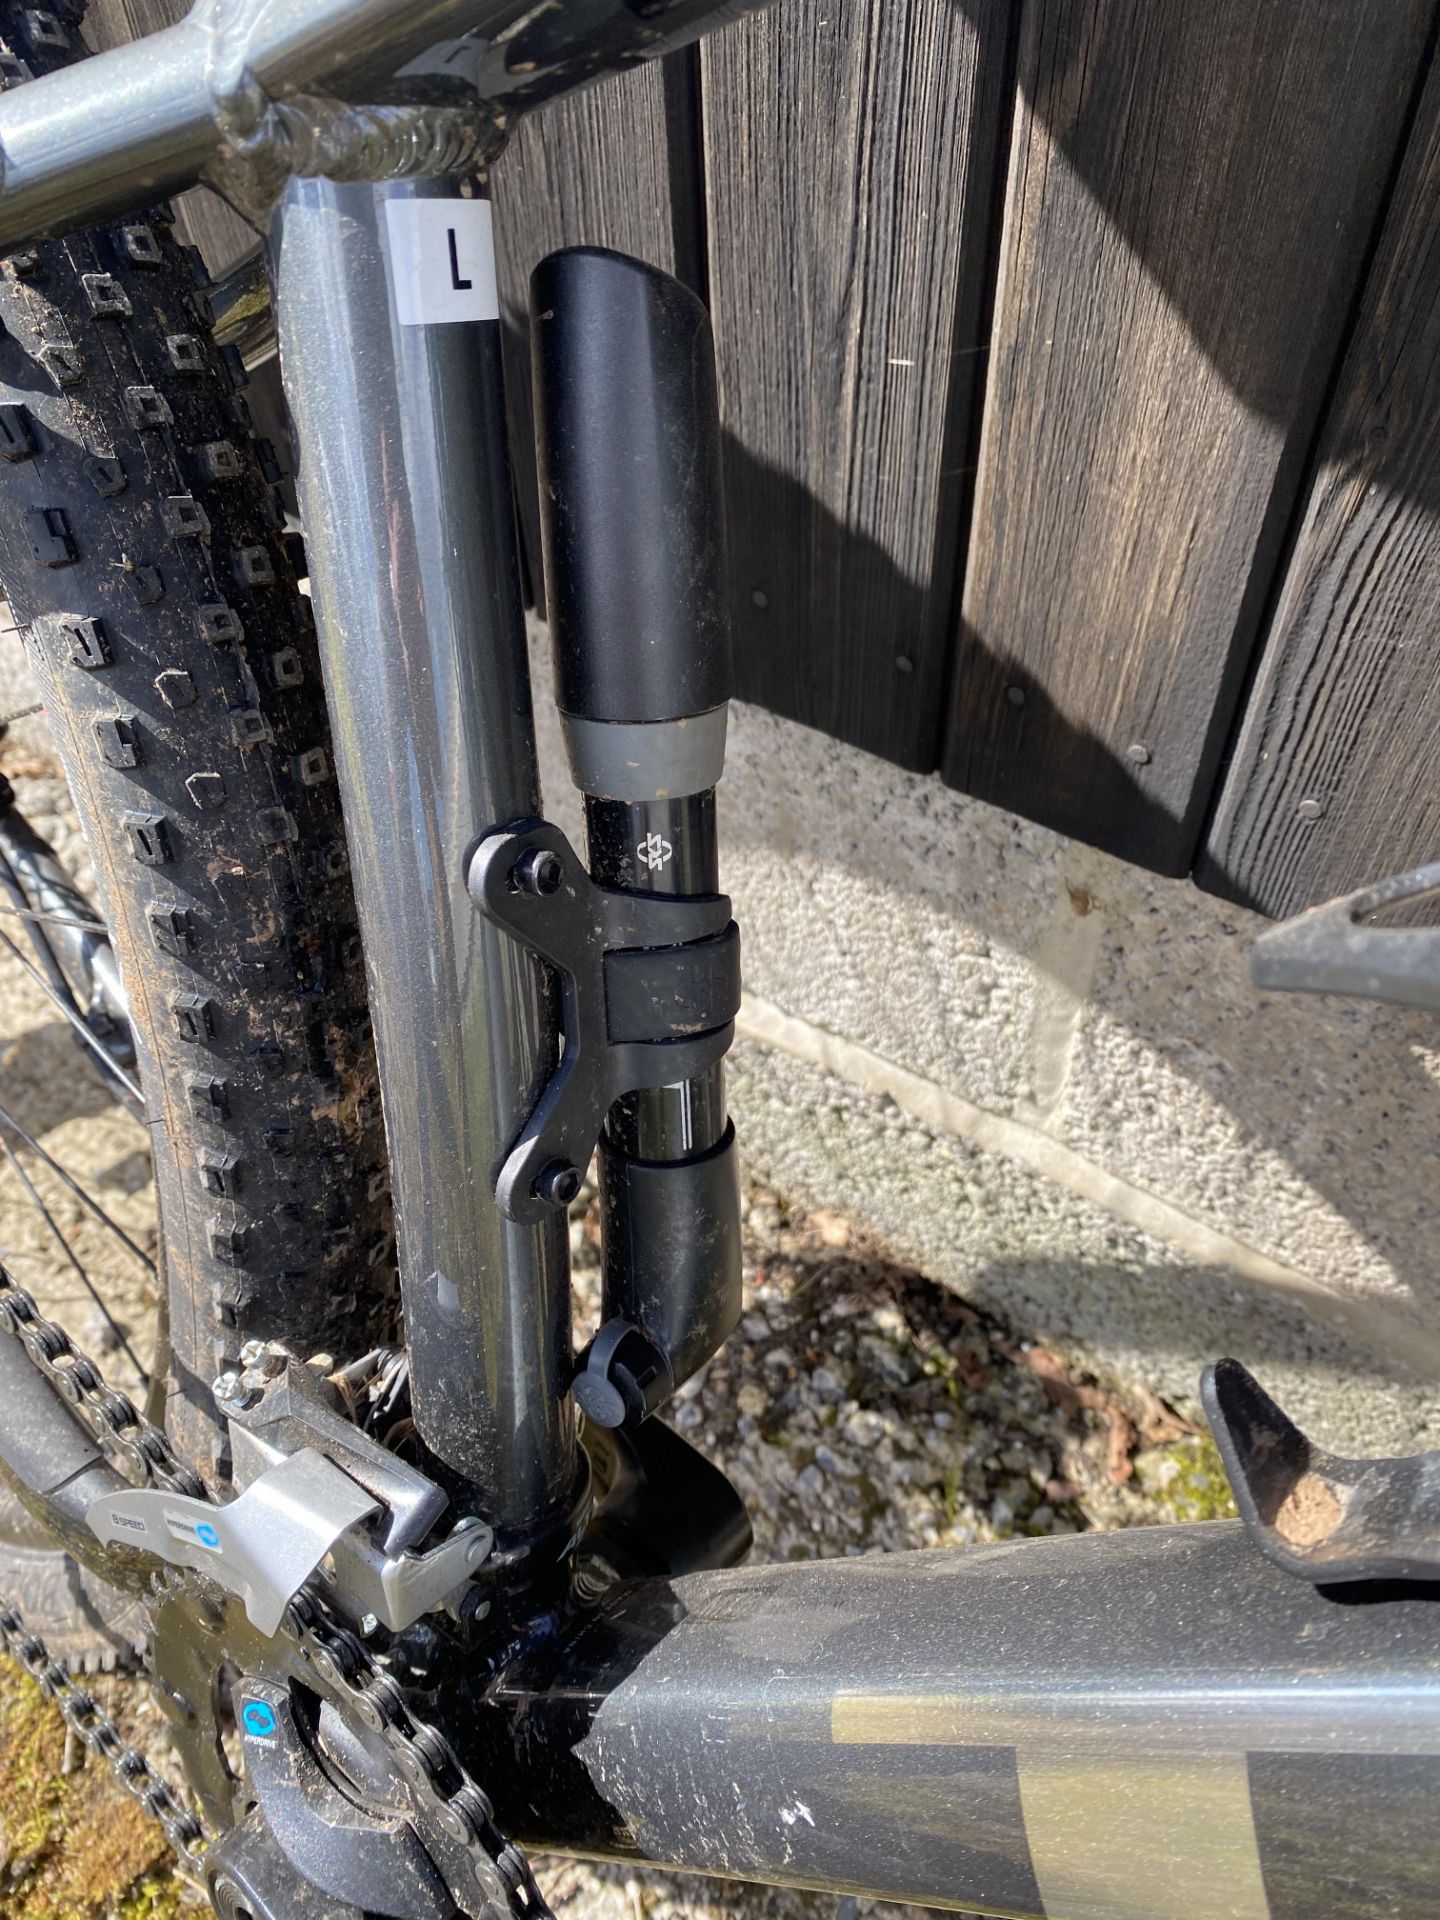 Marlin 5 Trek bike with frame mounted tyre pump, drinks holder & seat bag/tool kit,18.5" frame size, - Image 4 of 8